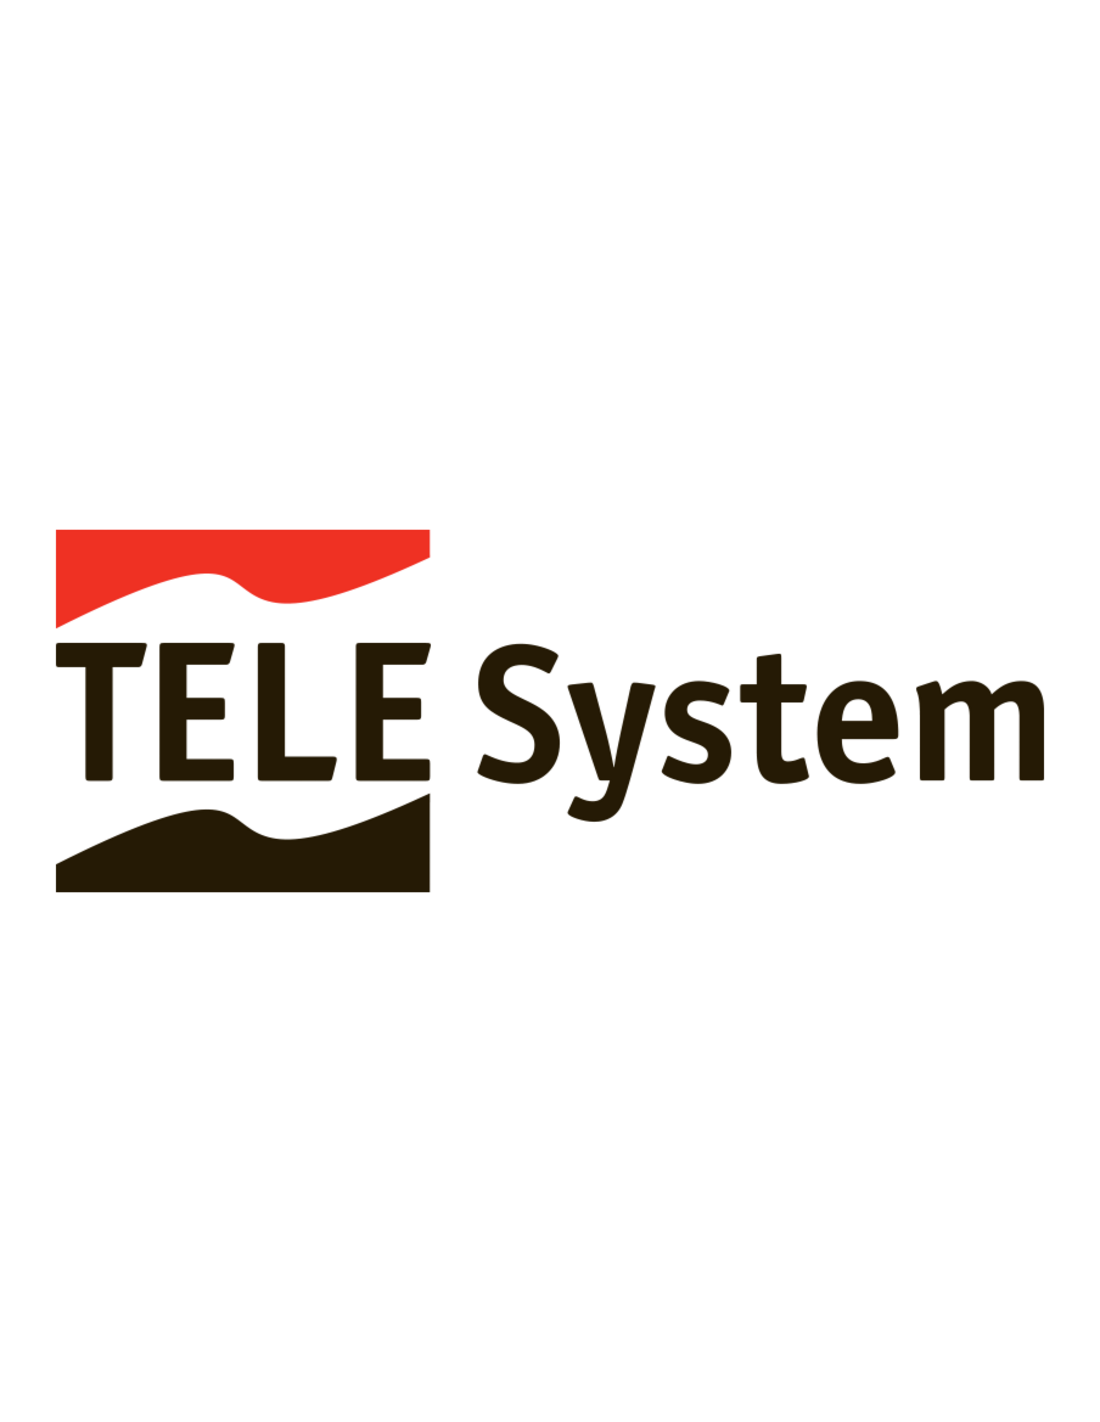 TELE SYSTEM